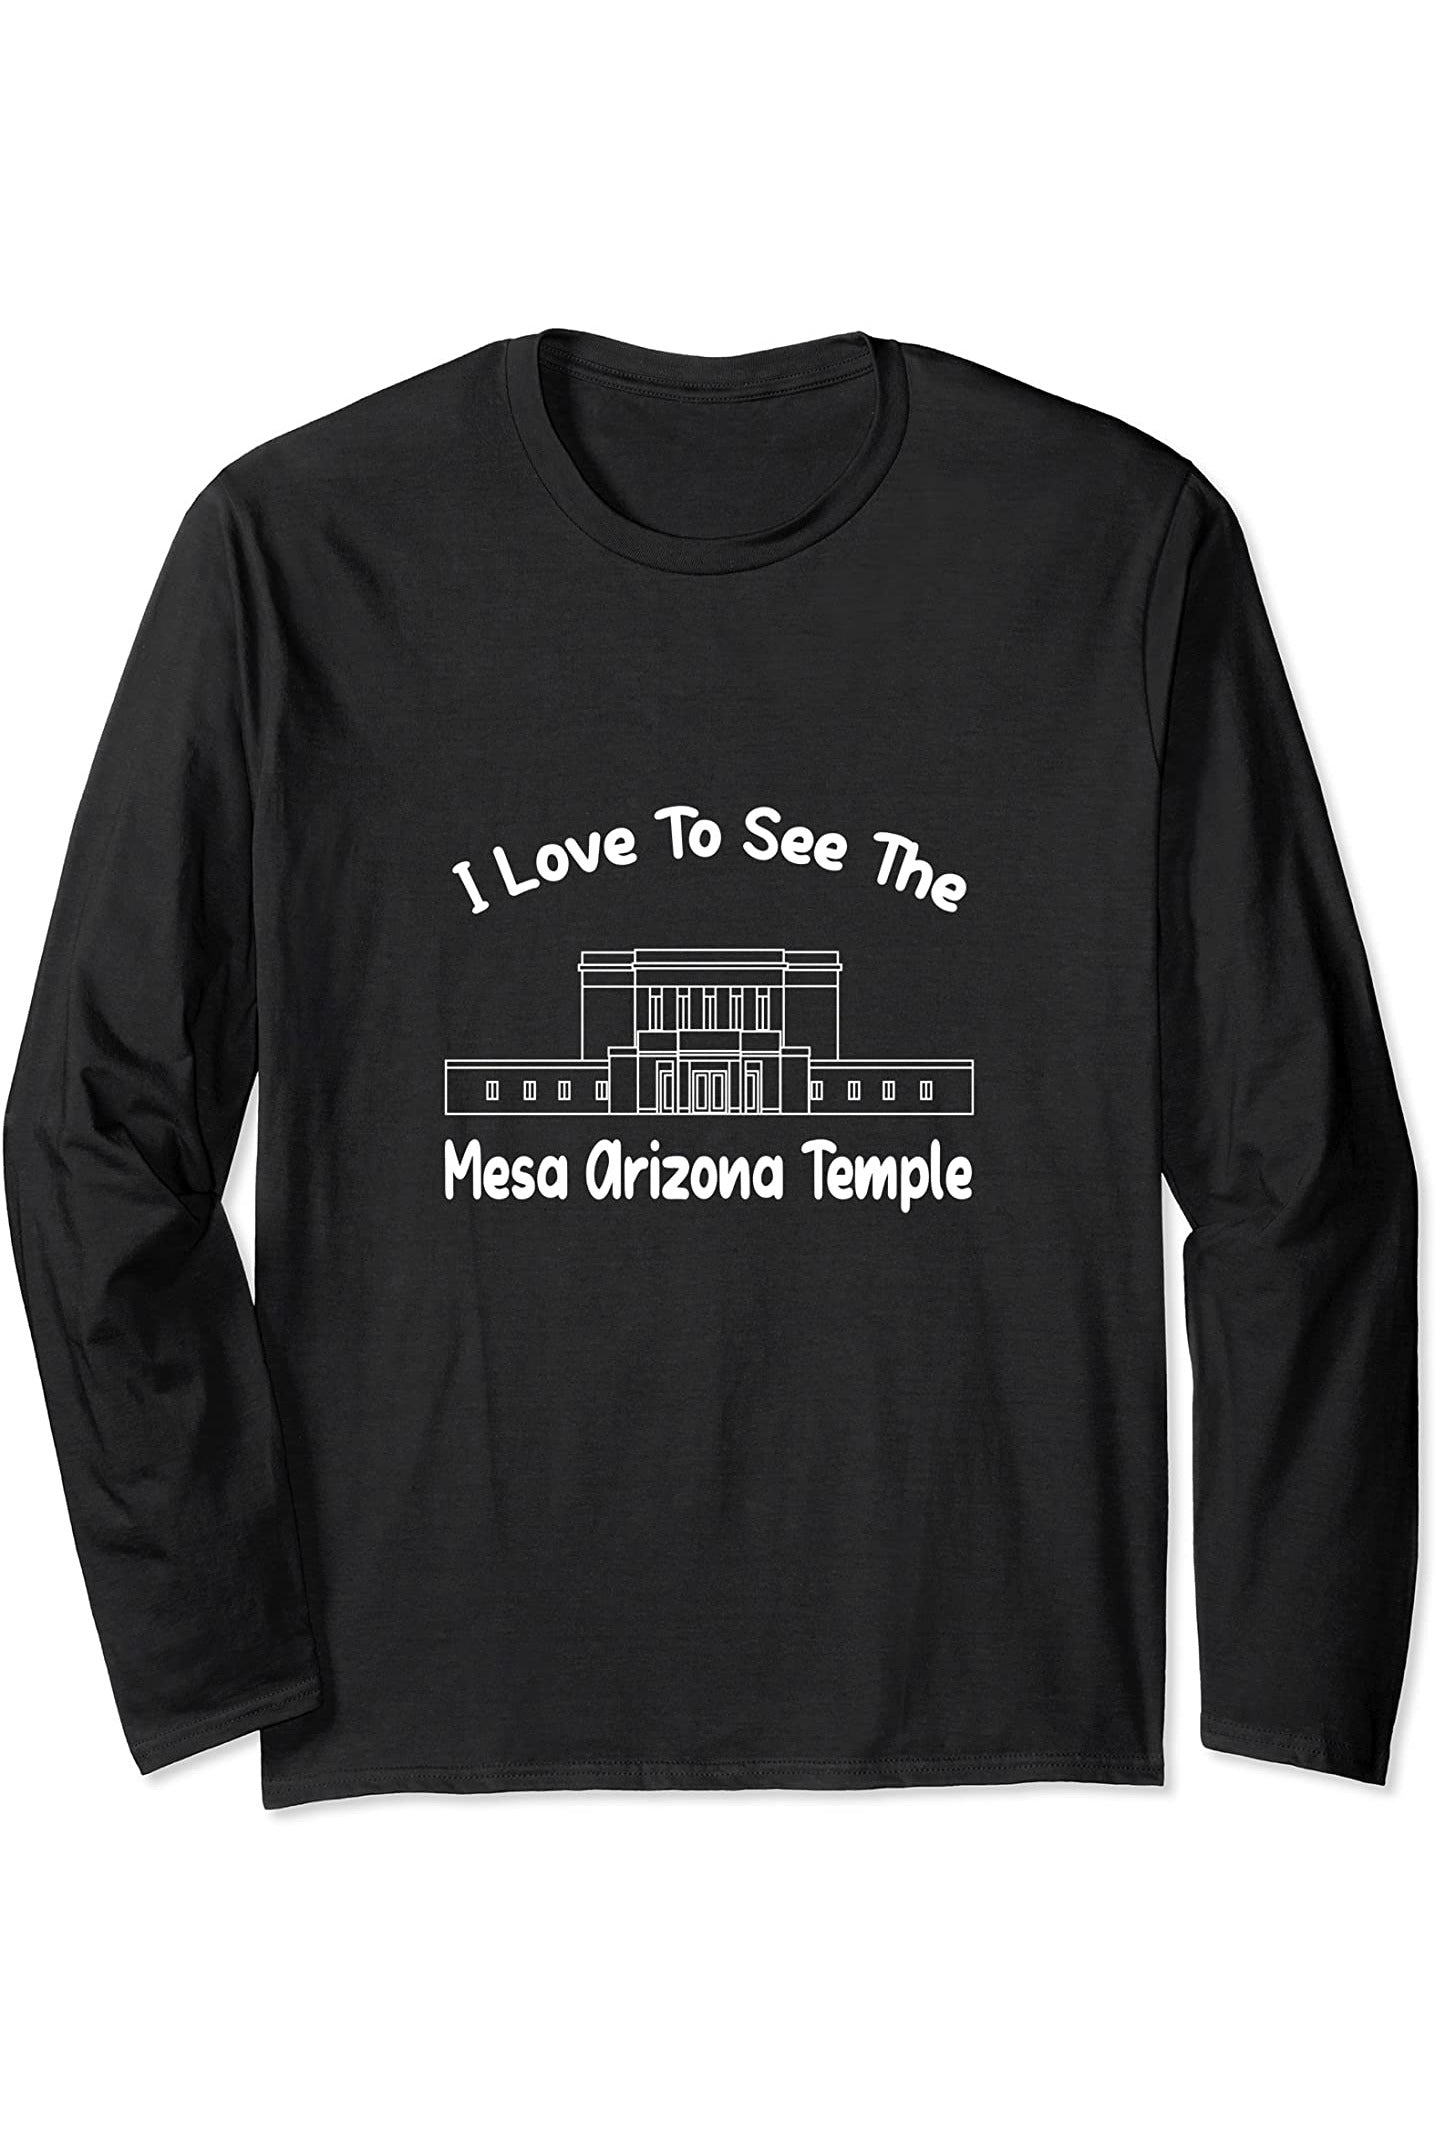 Mesa Arizona Temple Long Sleeve T-Shirt - Primary Style (English) US